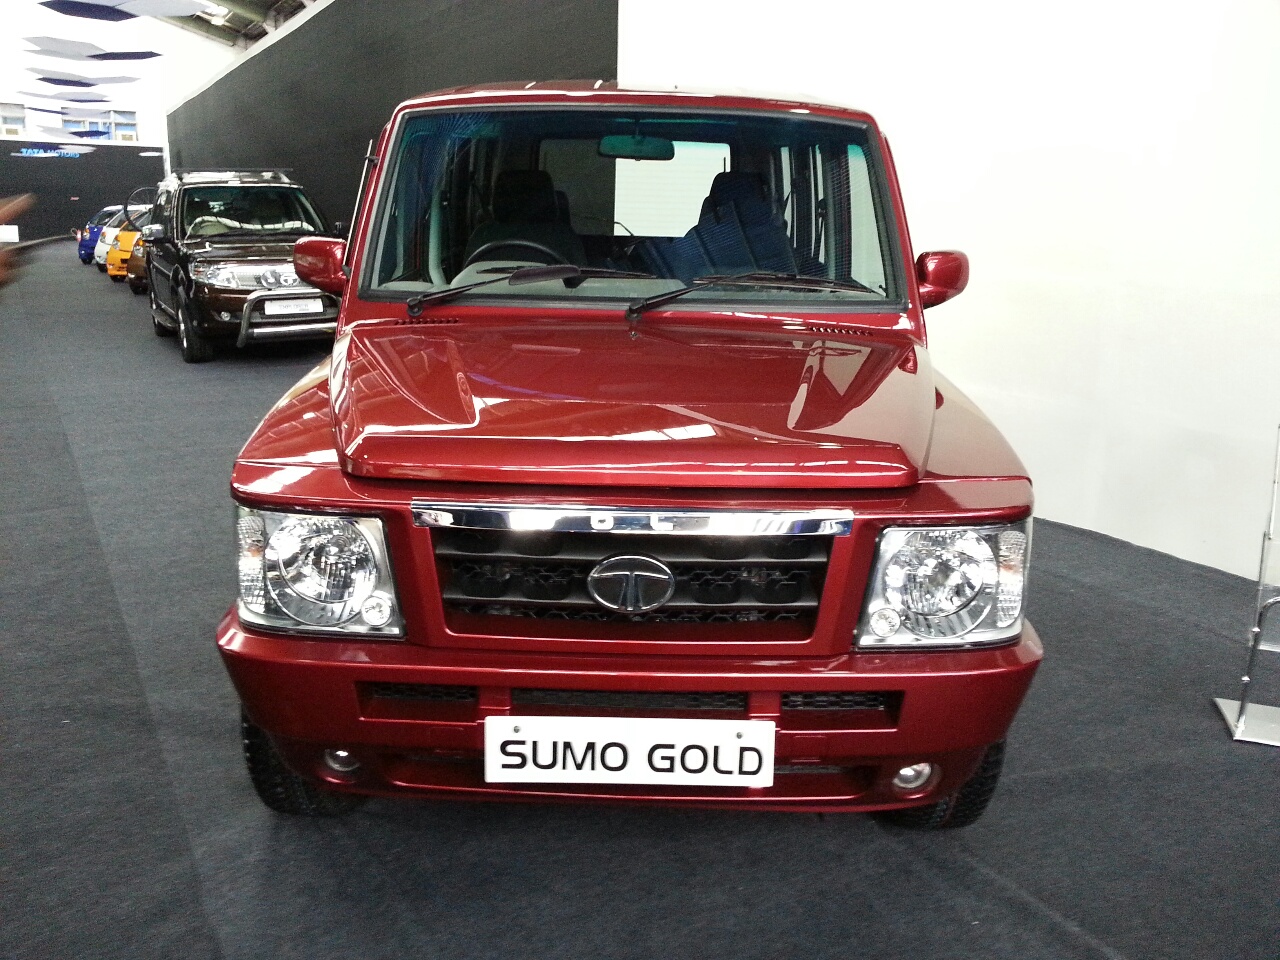 2013 Tata Sumo Gold Facelift Gets More Equipment